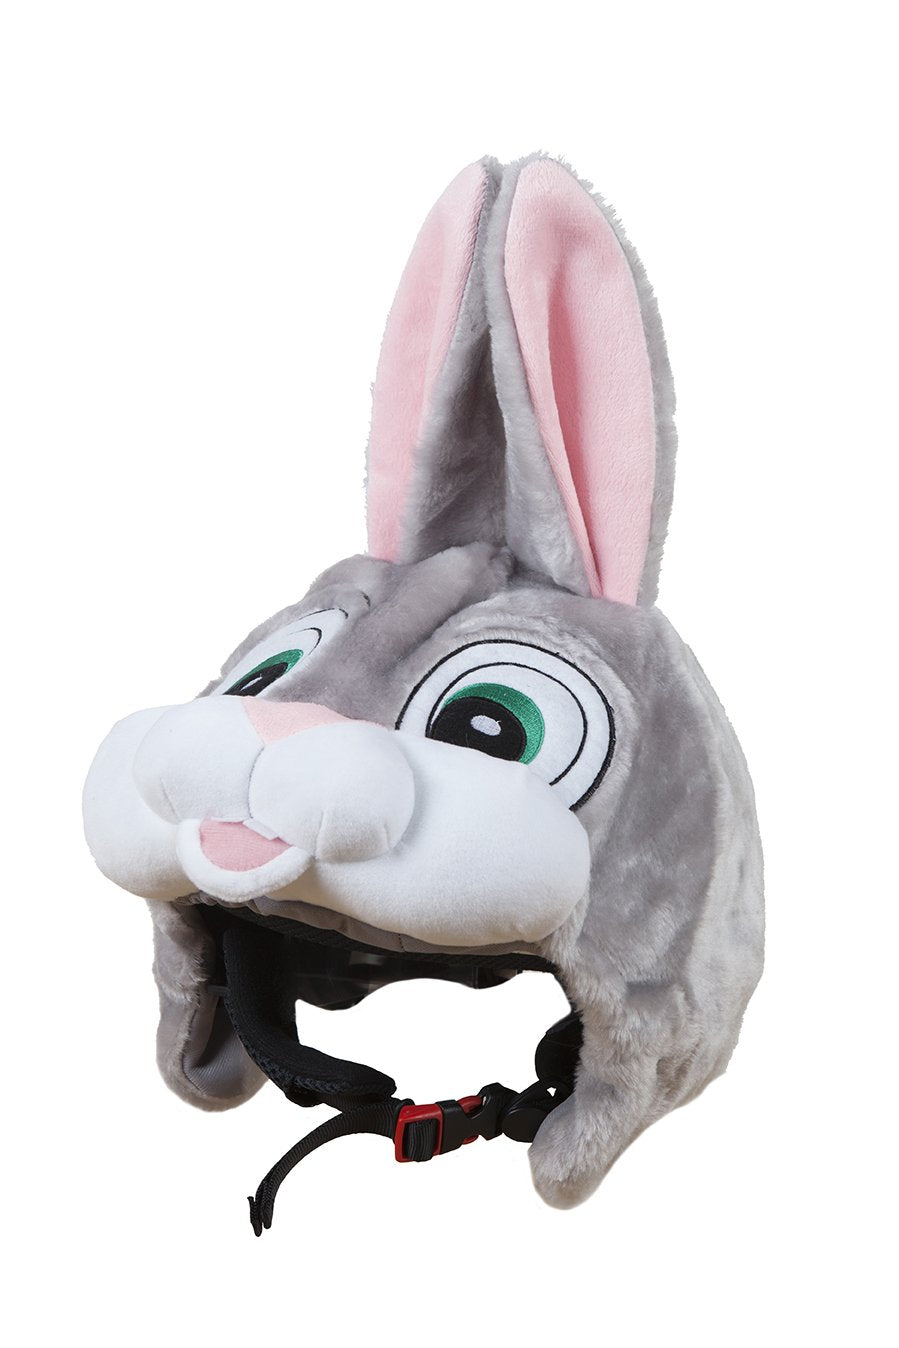 Bunny helmet cover (helmet cover)